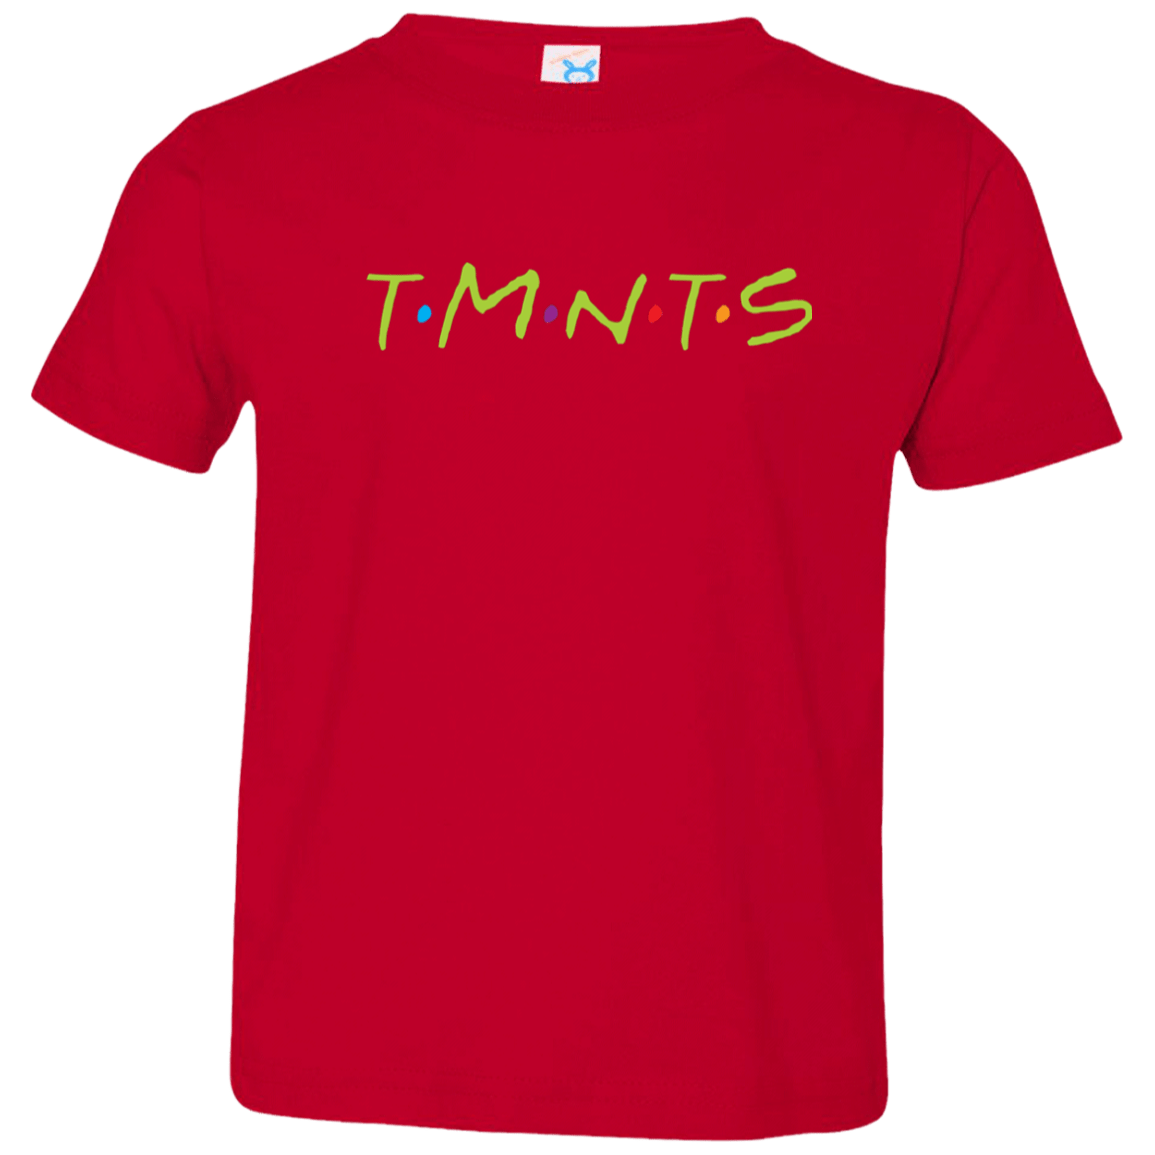 T-Shirts Red / 2T TMNTS Toddler Premium T-Shirt